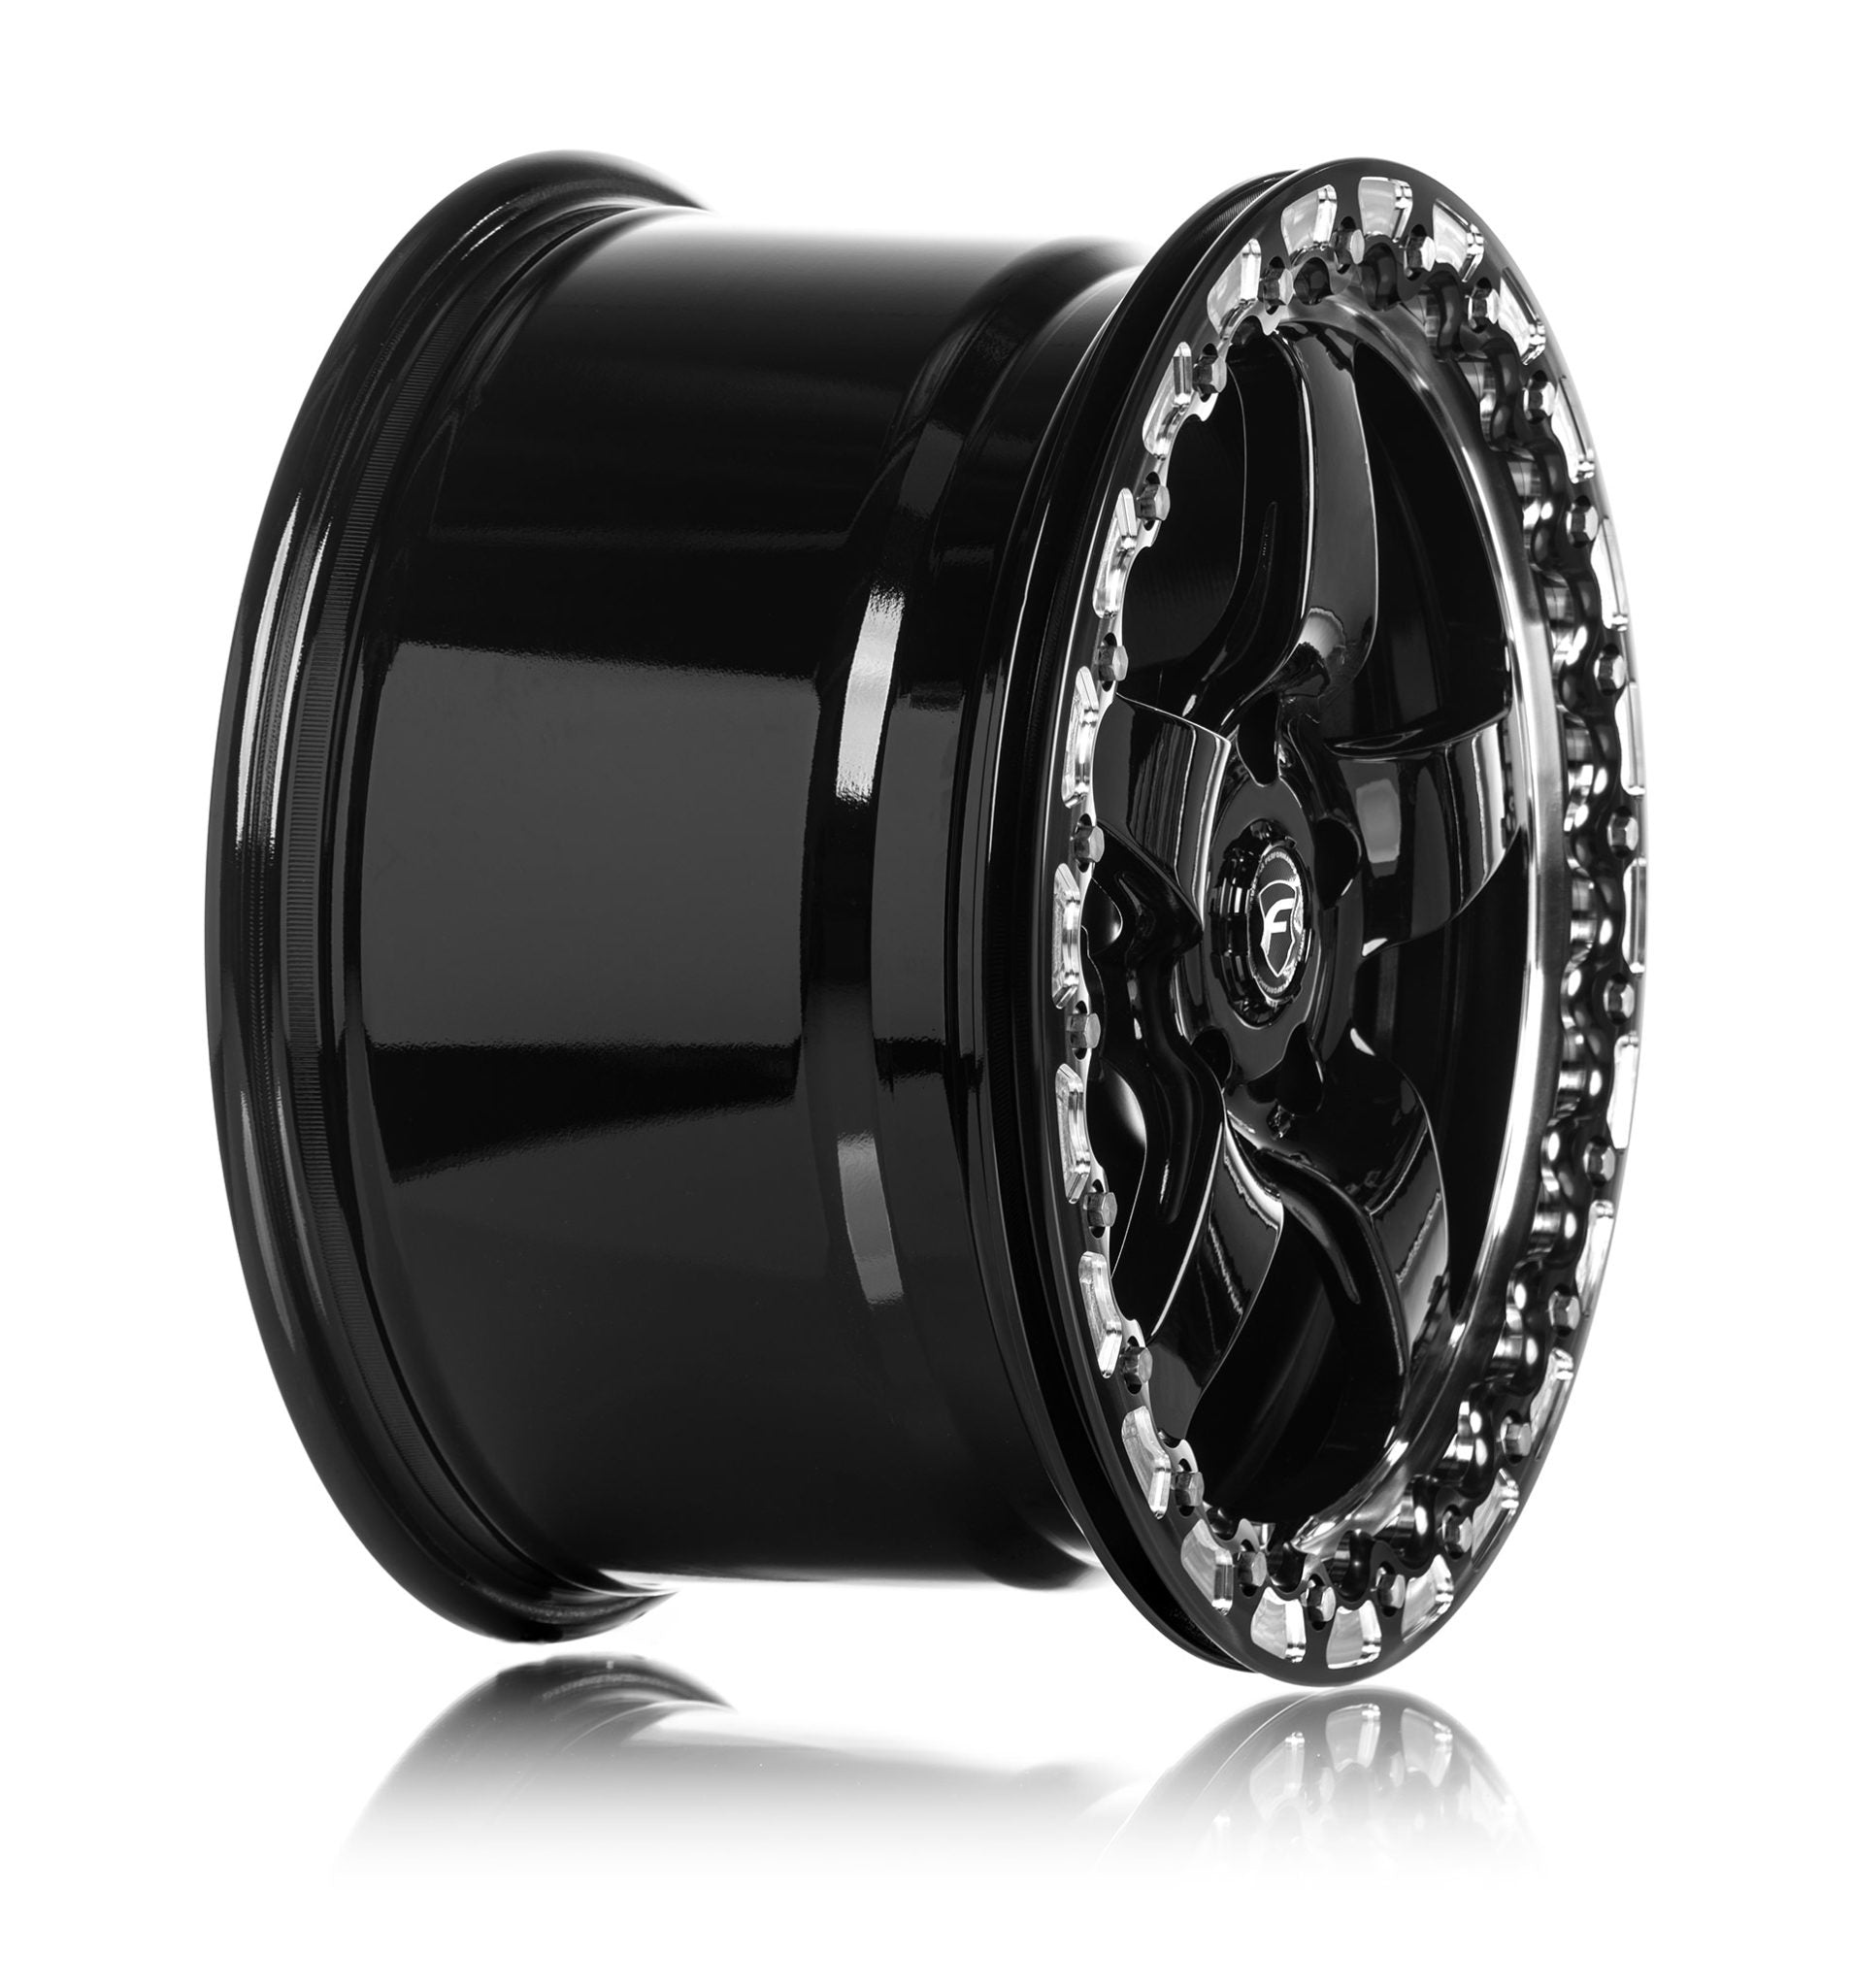 Forgestar D5 BEADLOCK Drag Racing Wheels - Gloss Black w/Machined Lip - 15X10 - Sold Individually - Motorsports LA